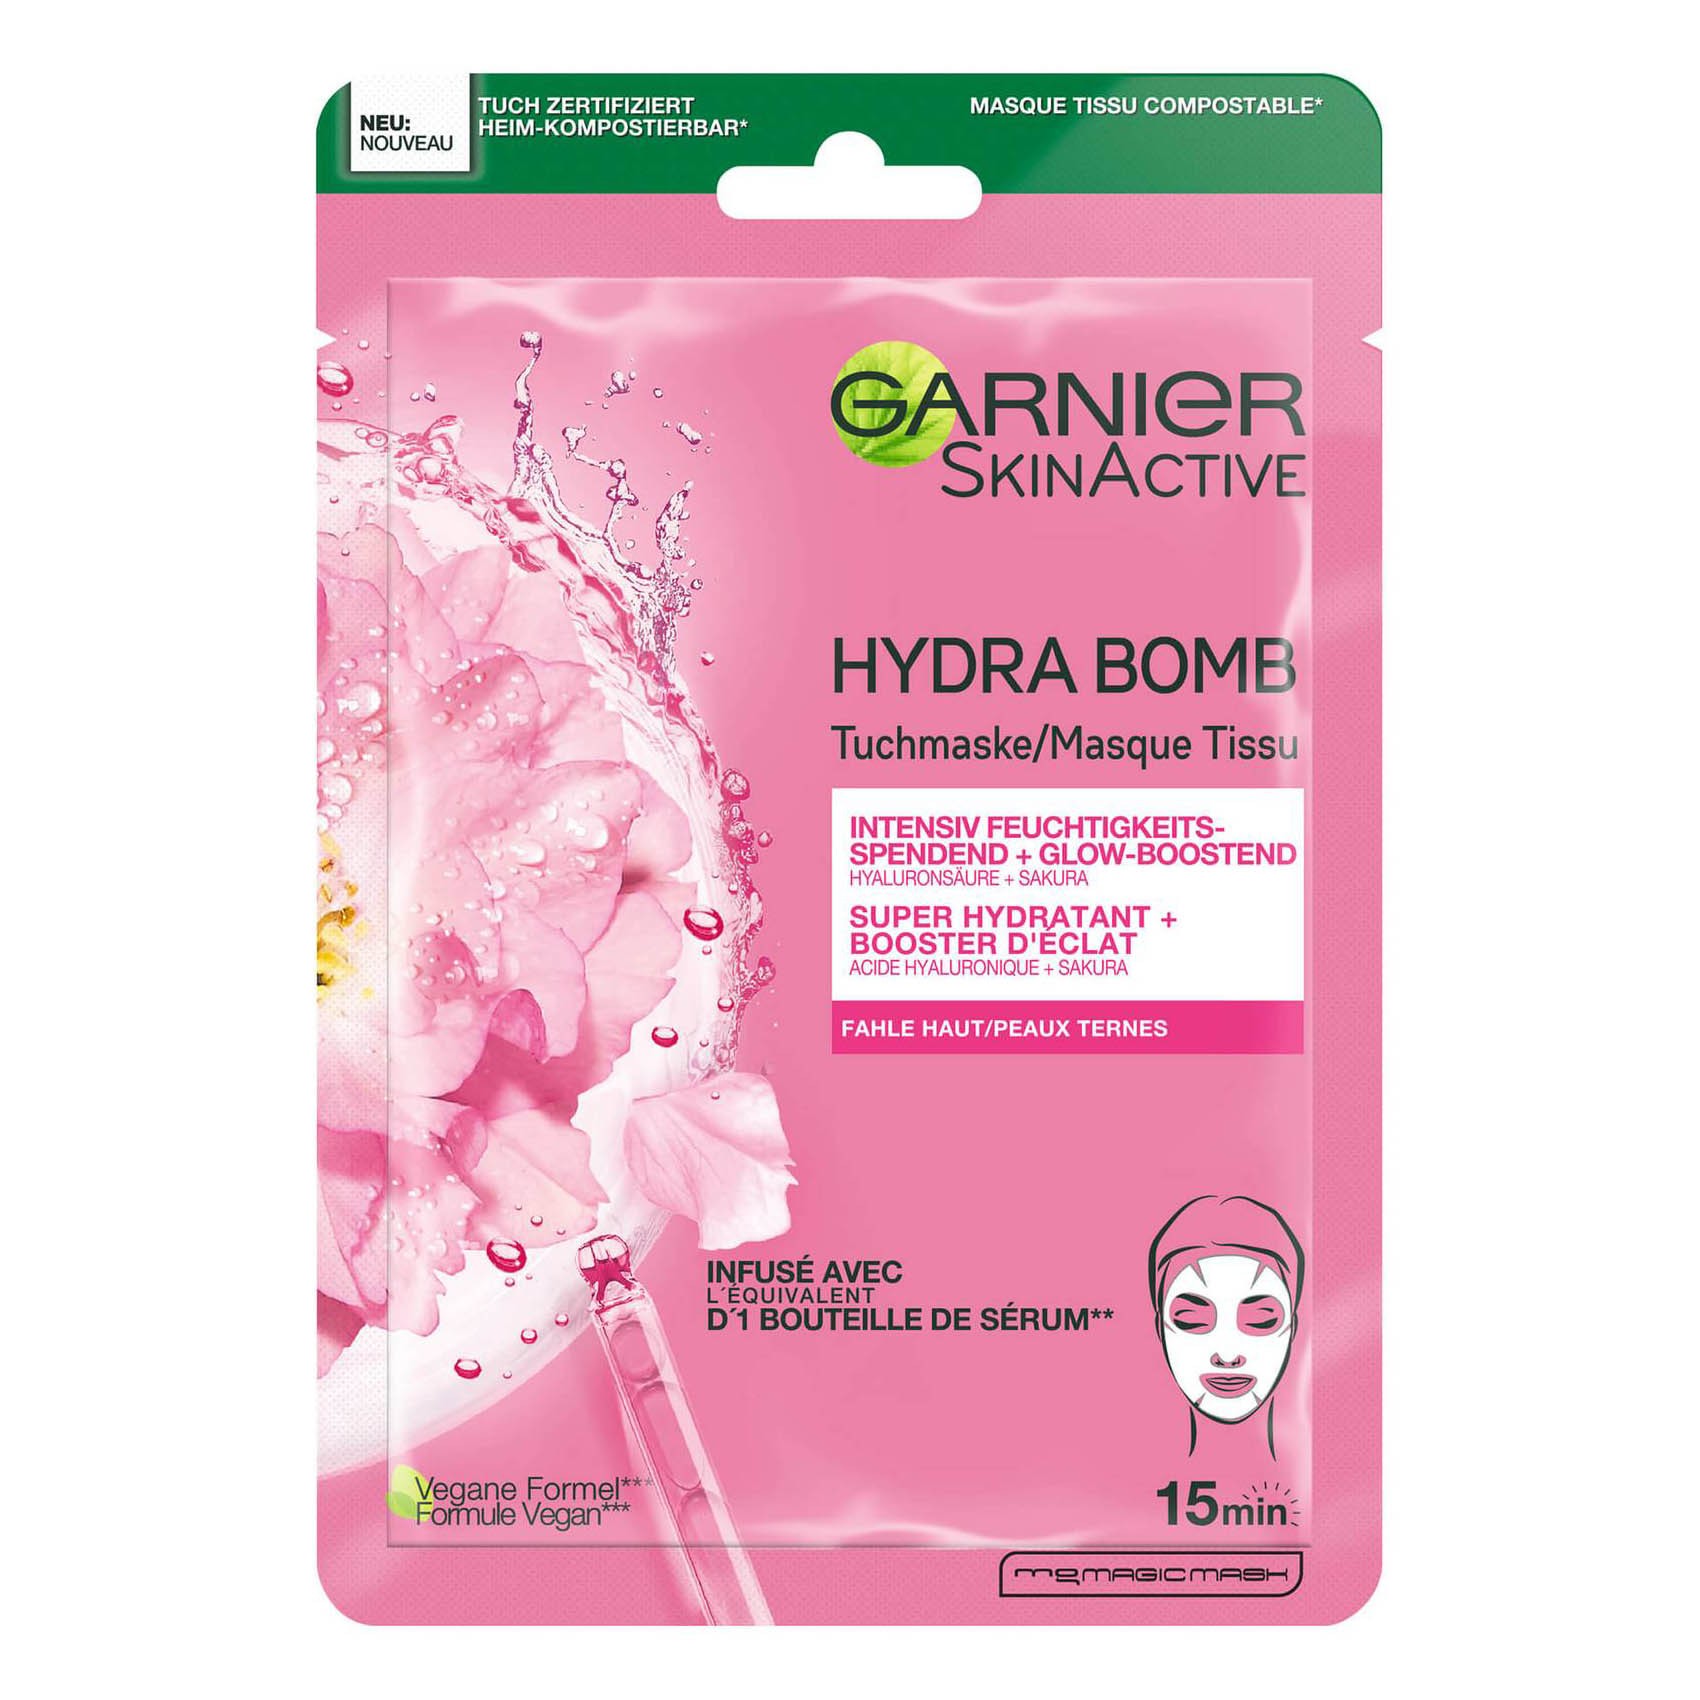 Hydra Bomb Tuchmaske - Feuchtigkeitsspendend & Glow-Boosting